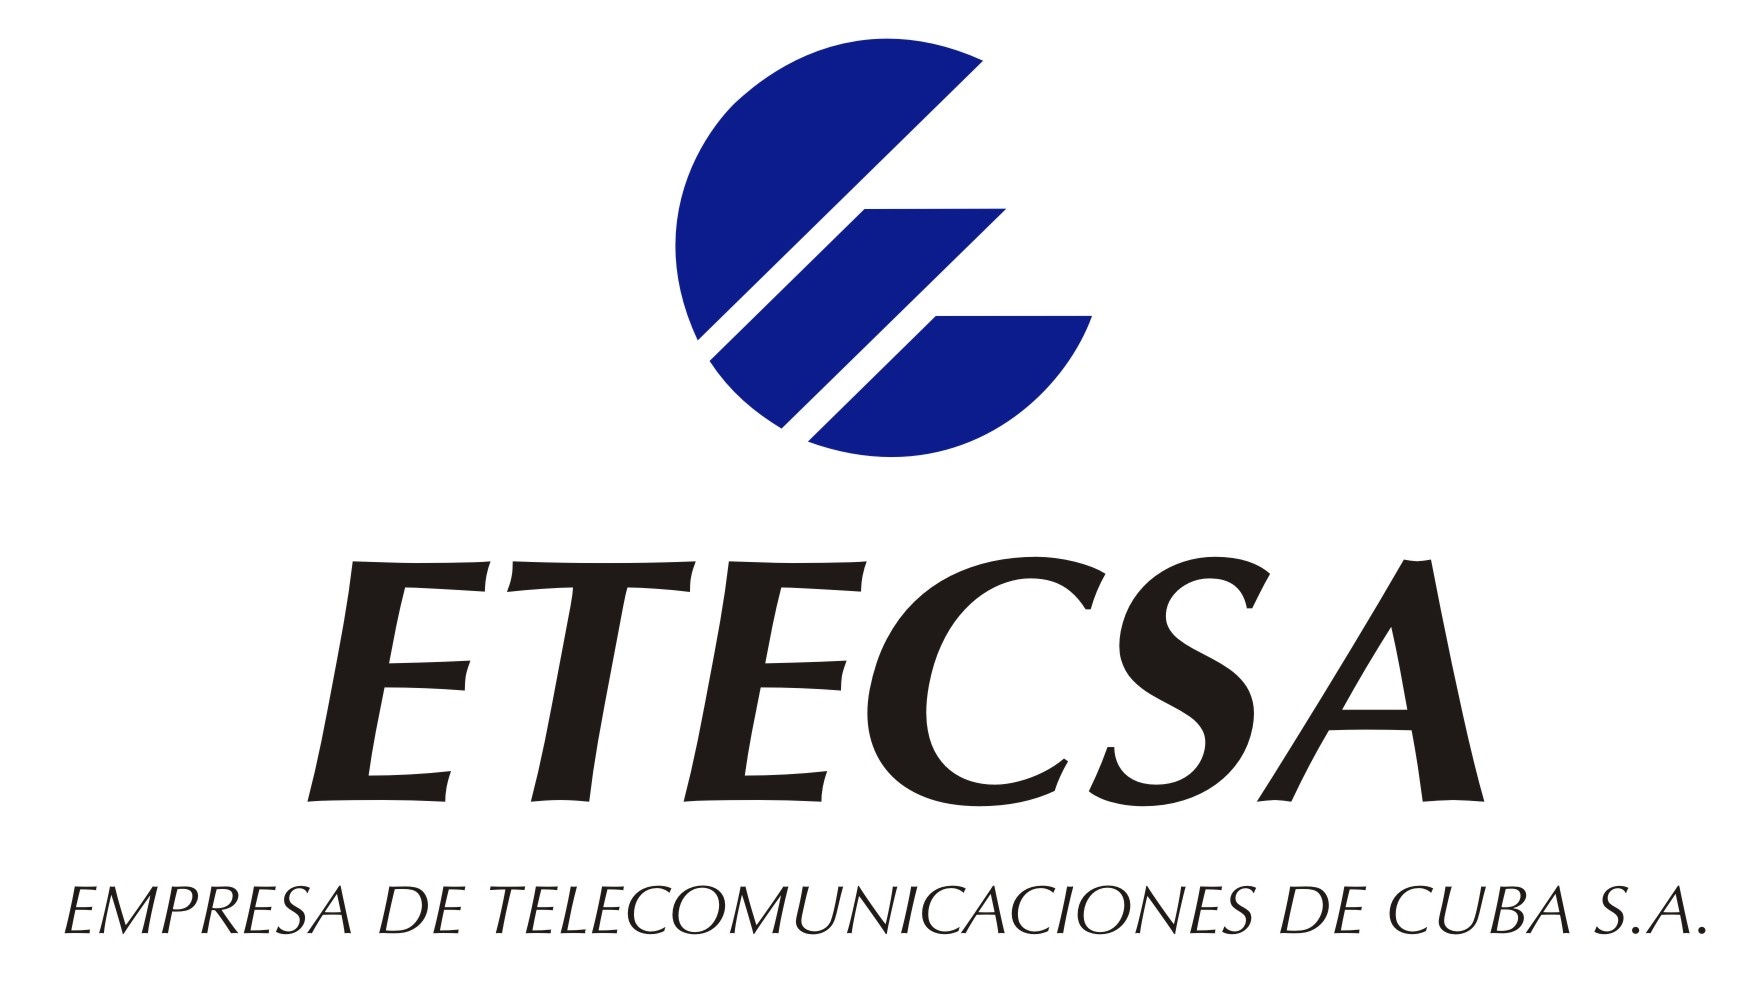 Logotipo-etecsa-version-piramidal-